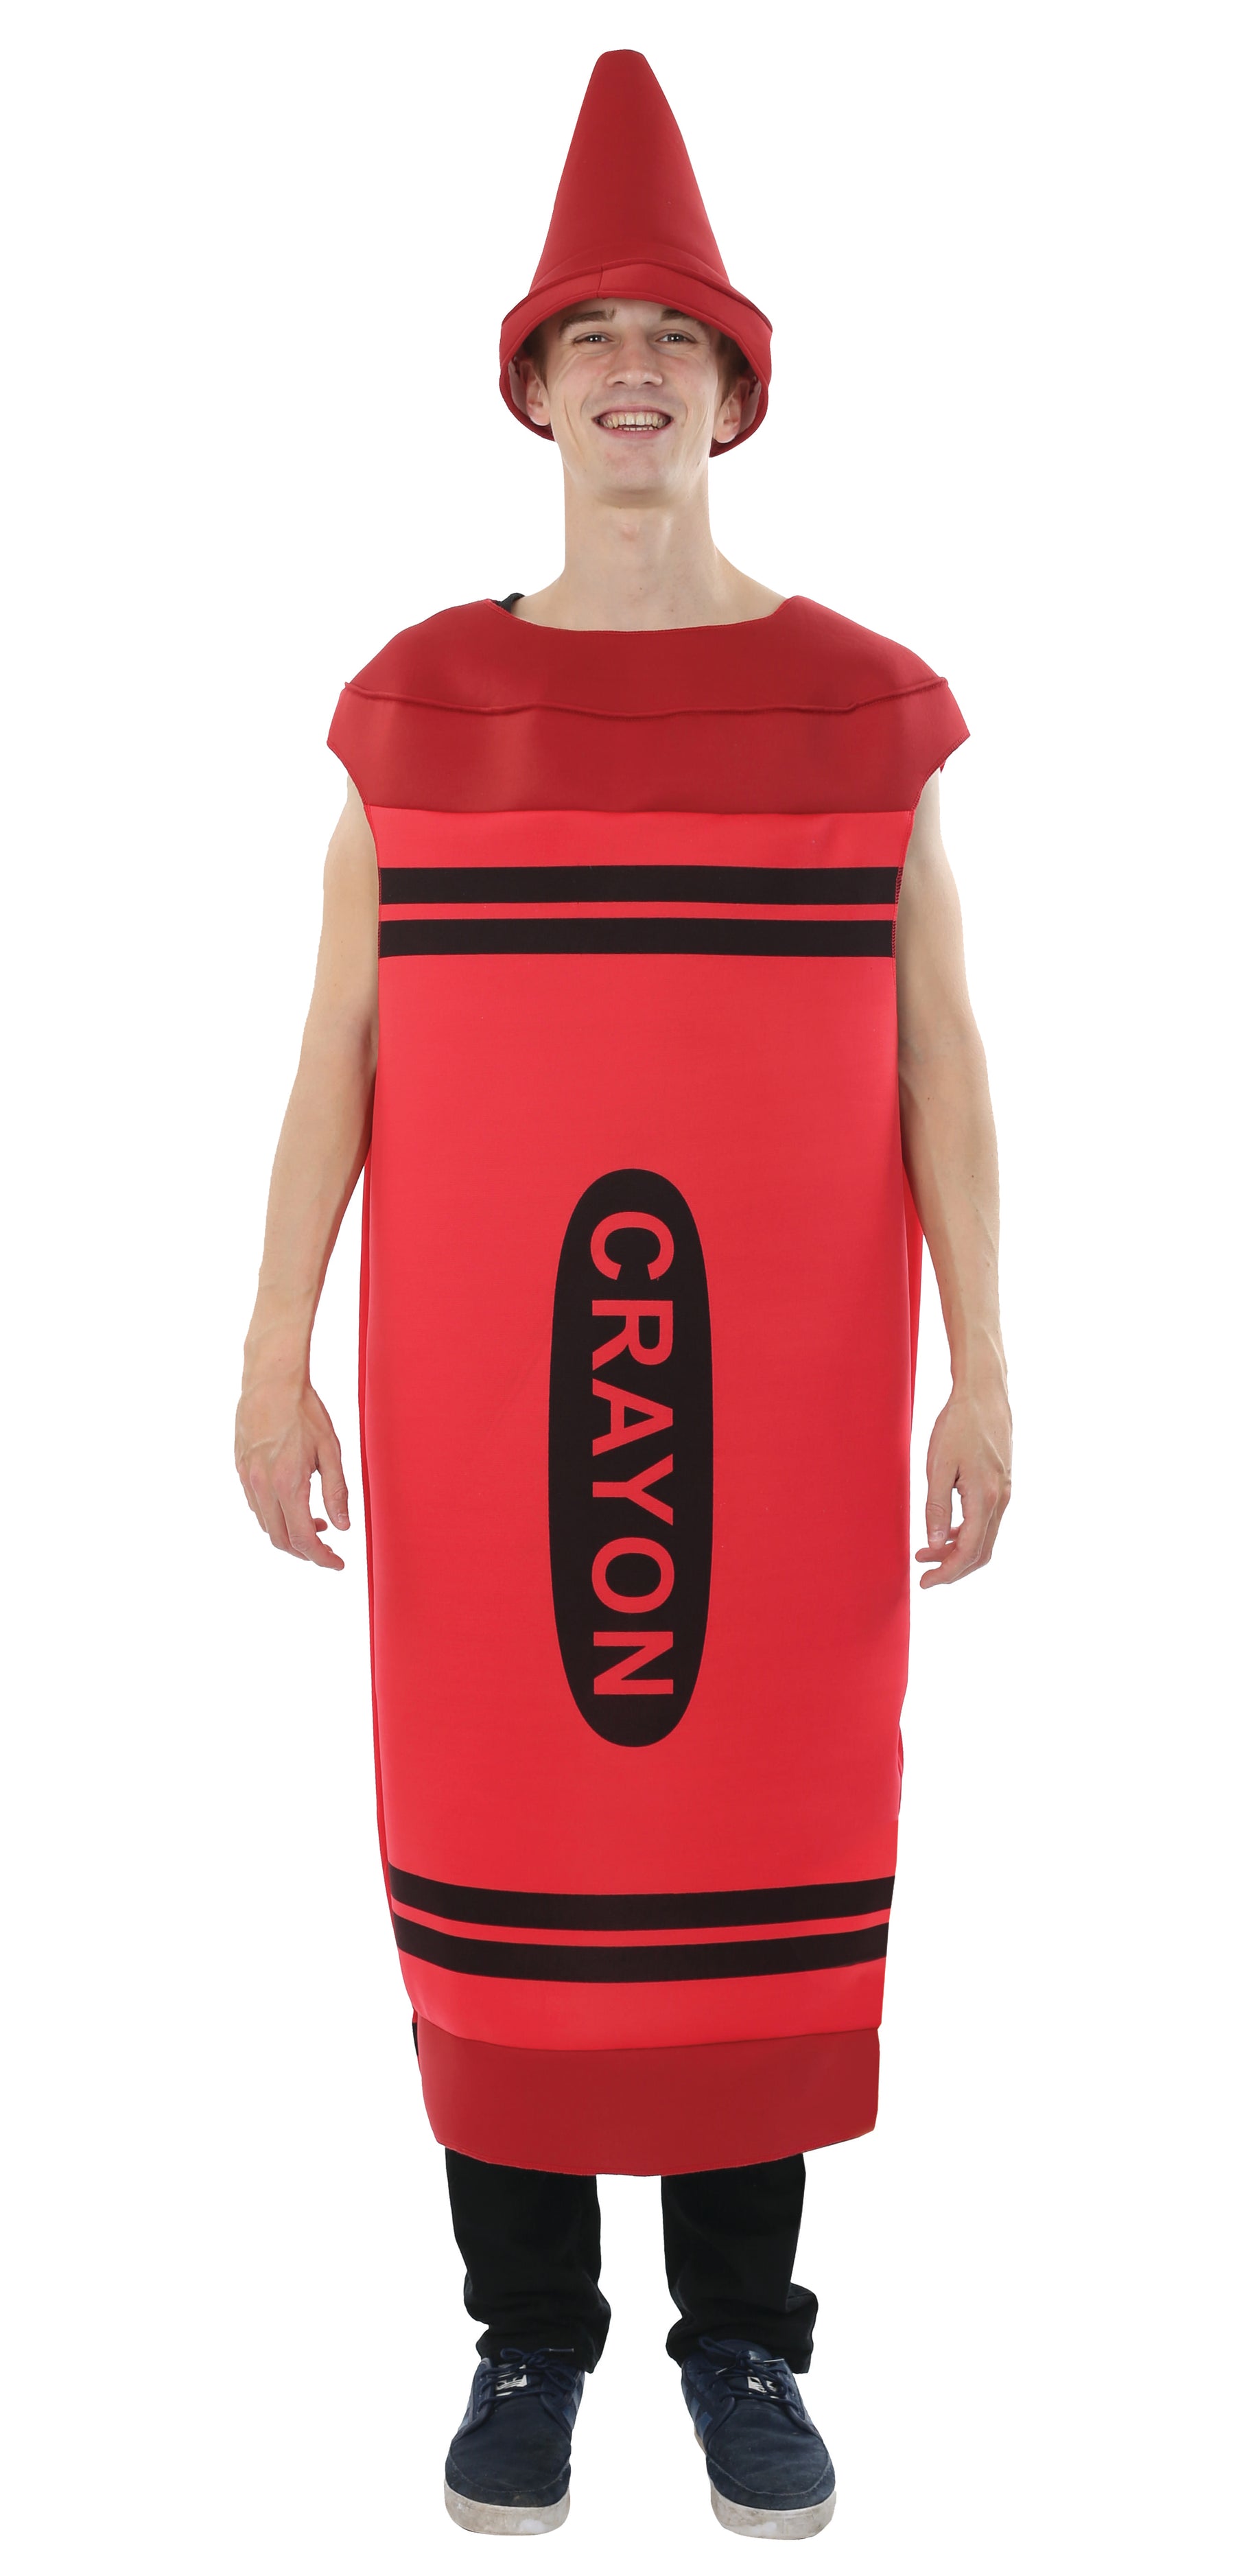 Crayon Box Costume Dress for Kids